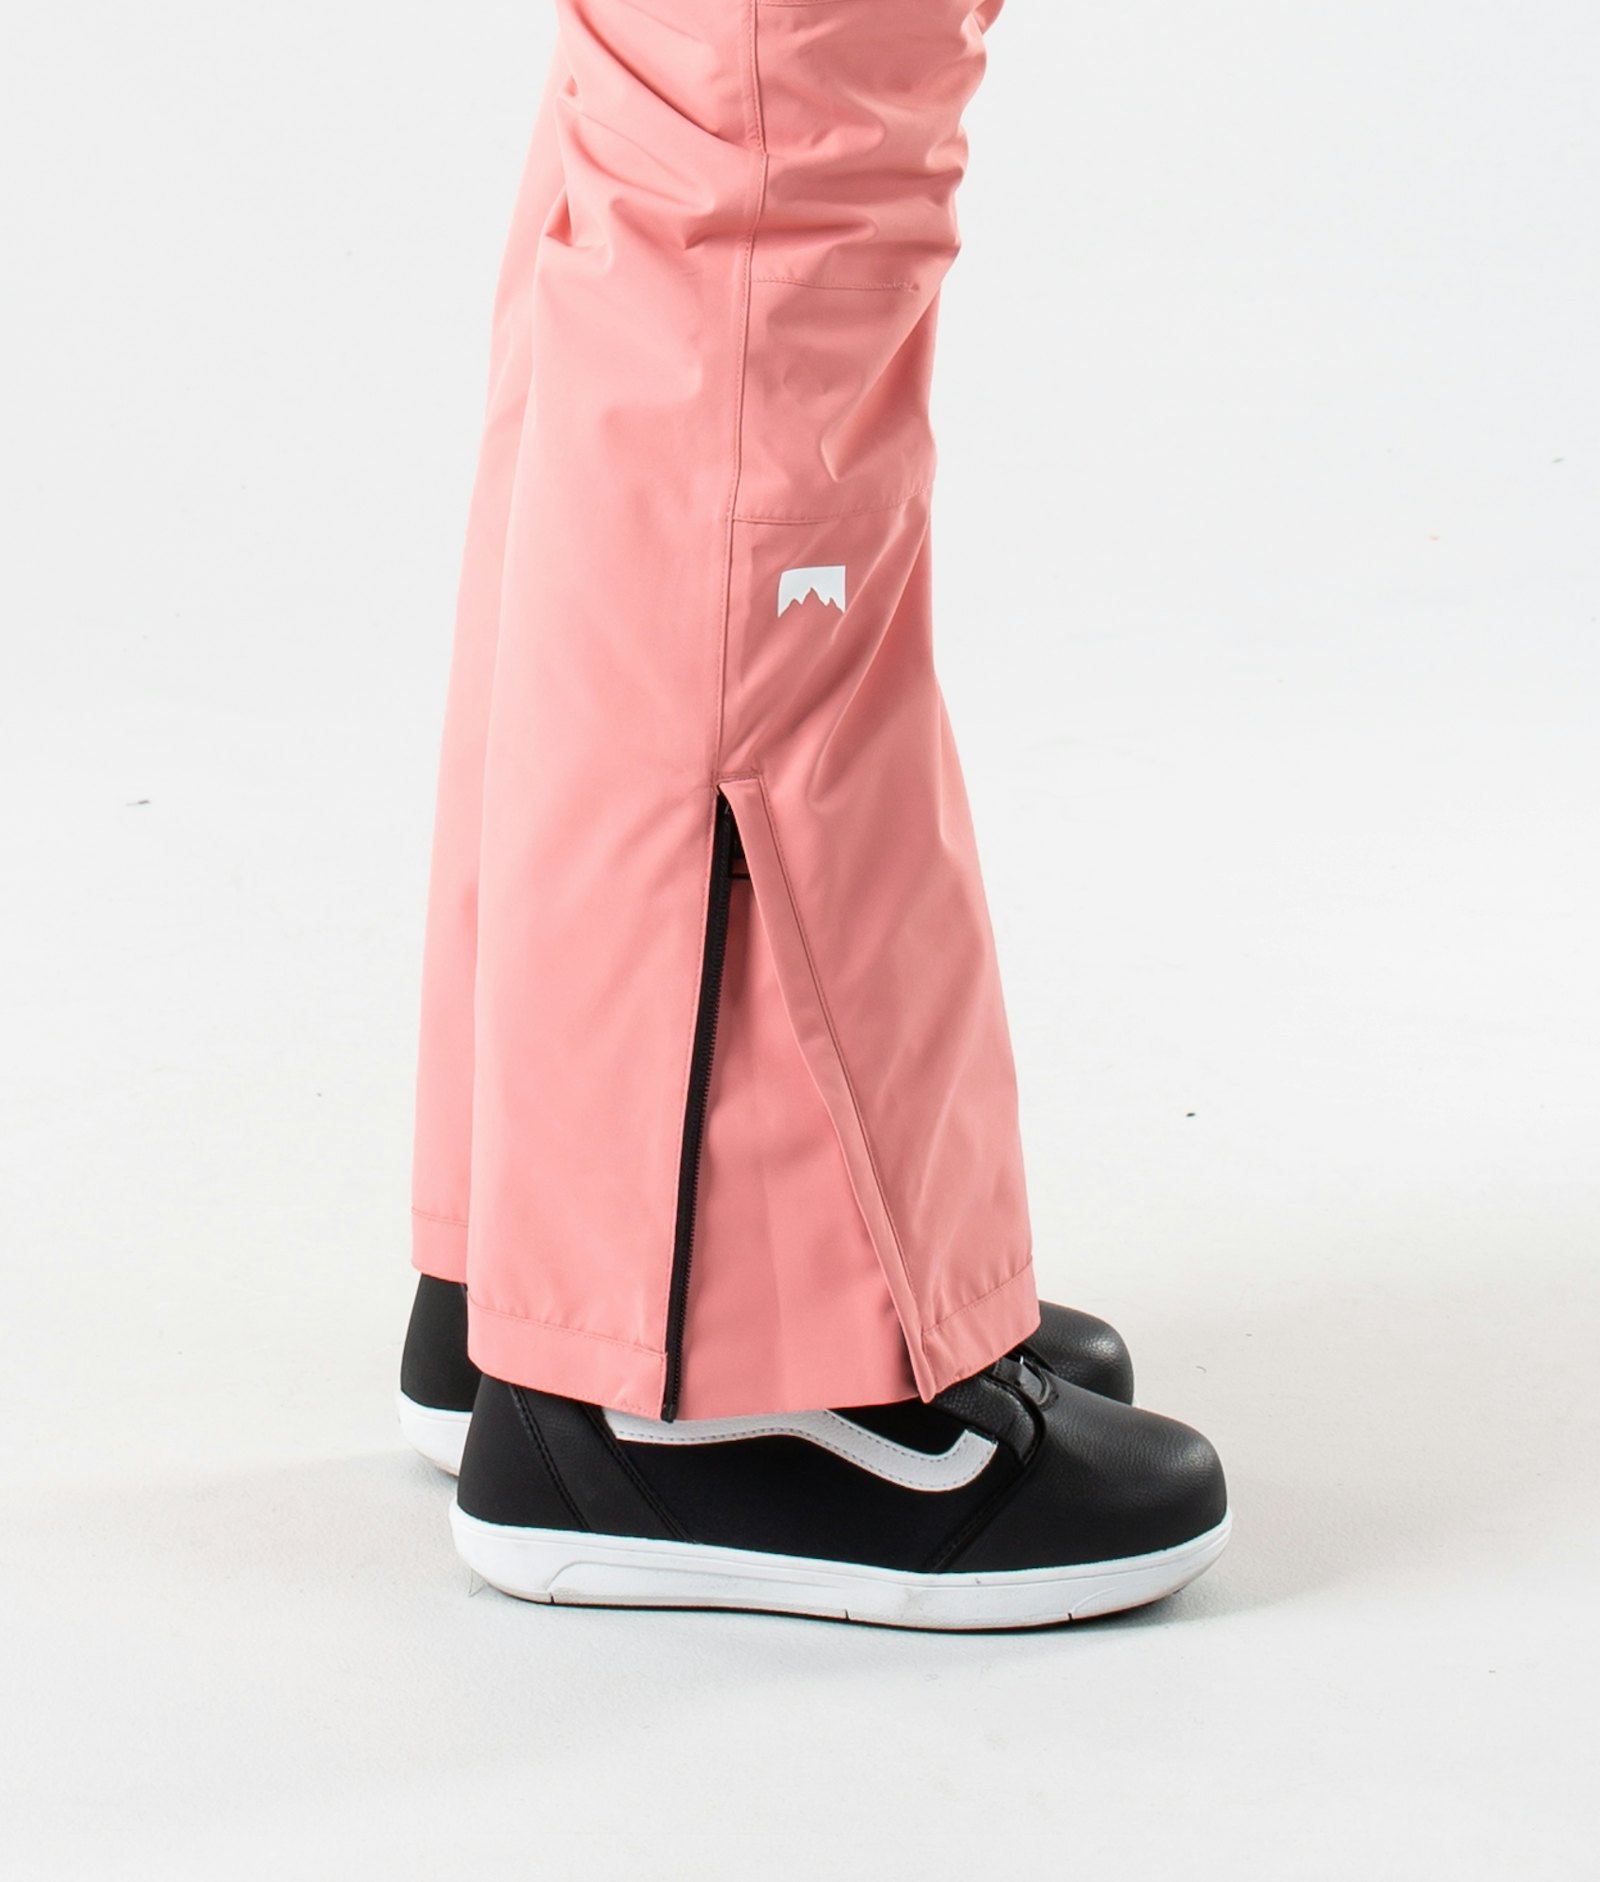 Doom W 2019 Pantalon de Snowboard Femme Pink